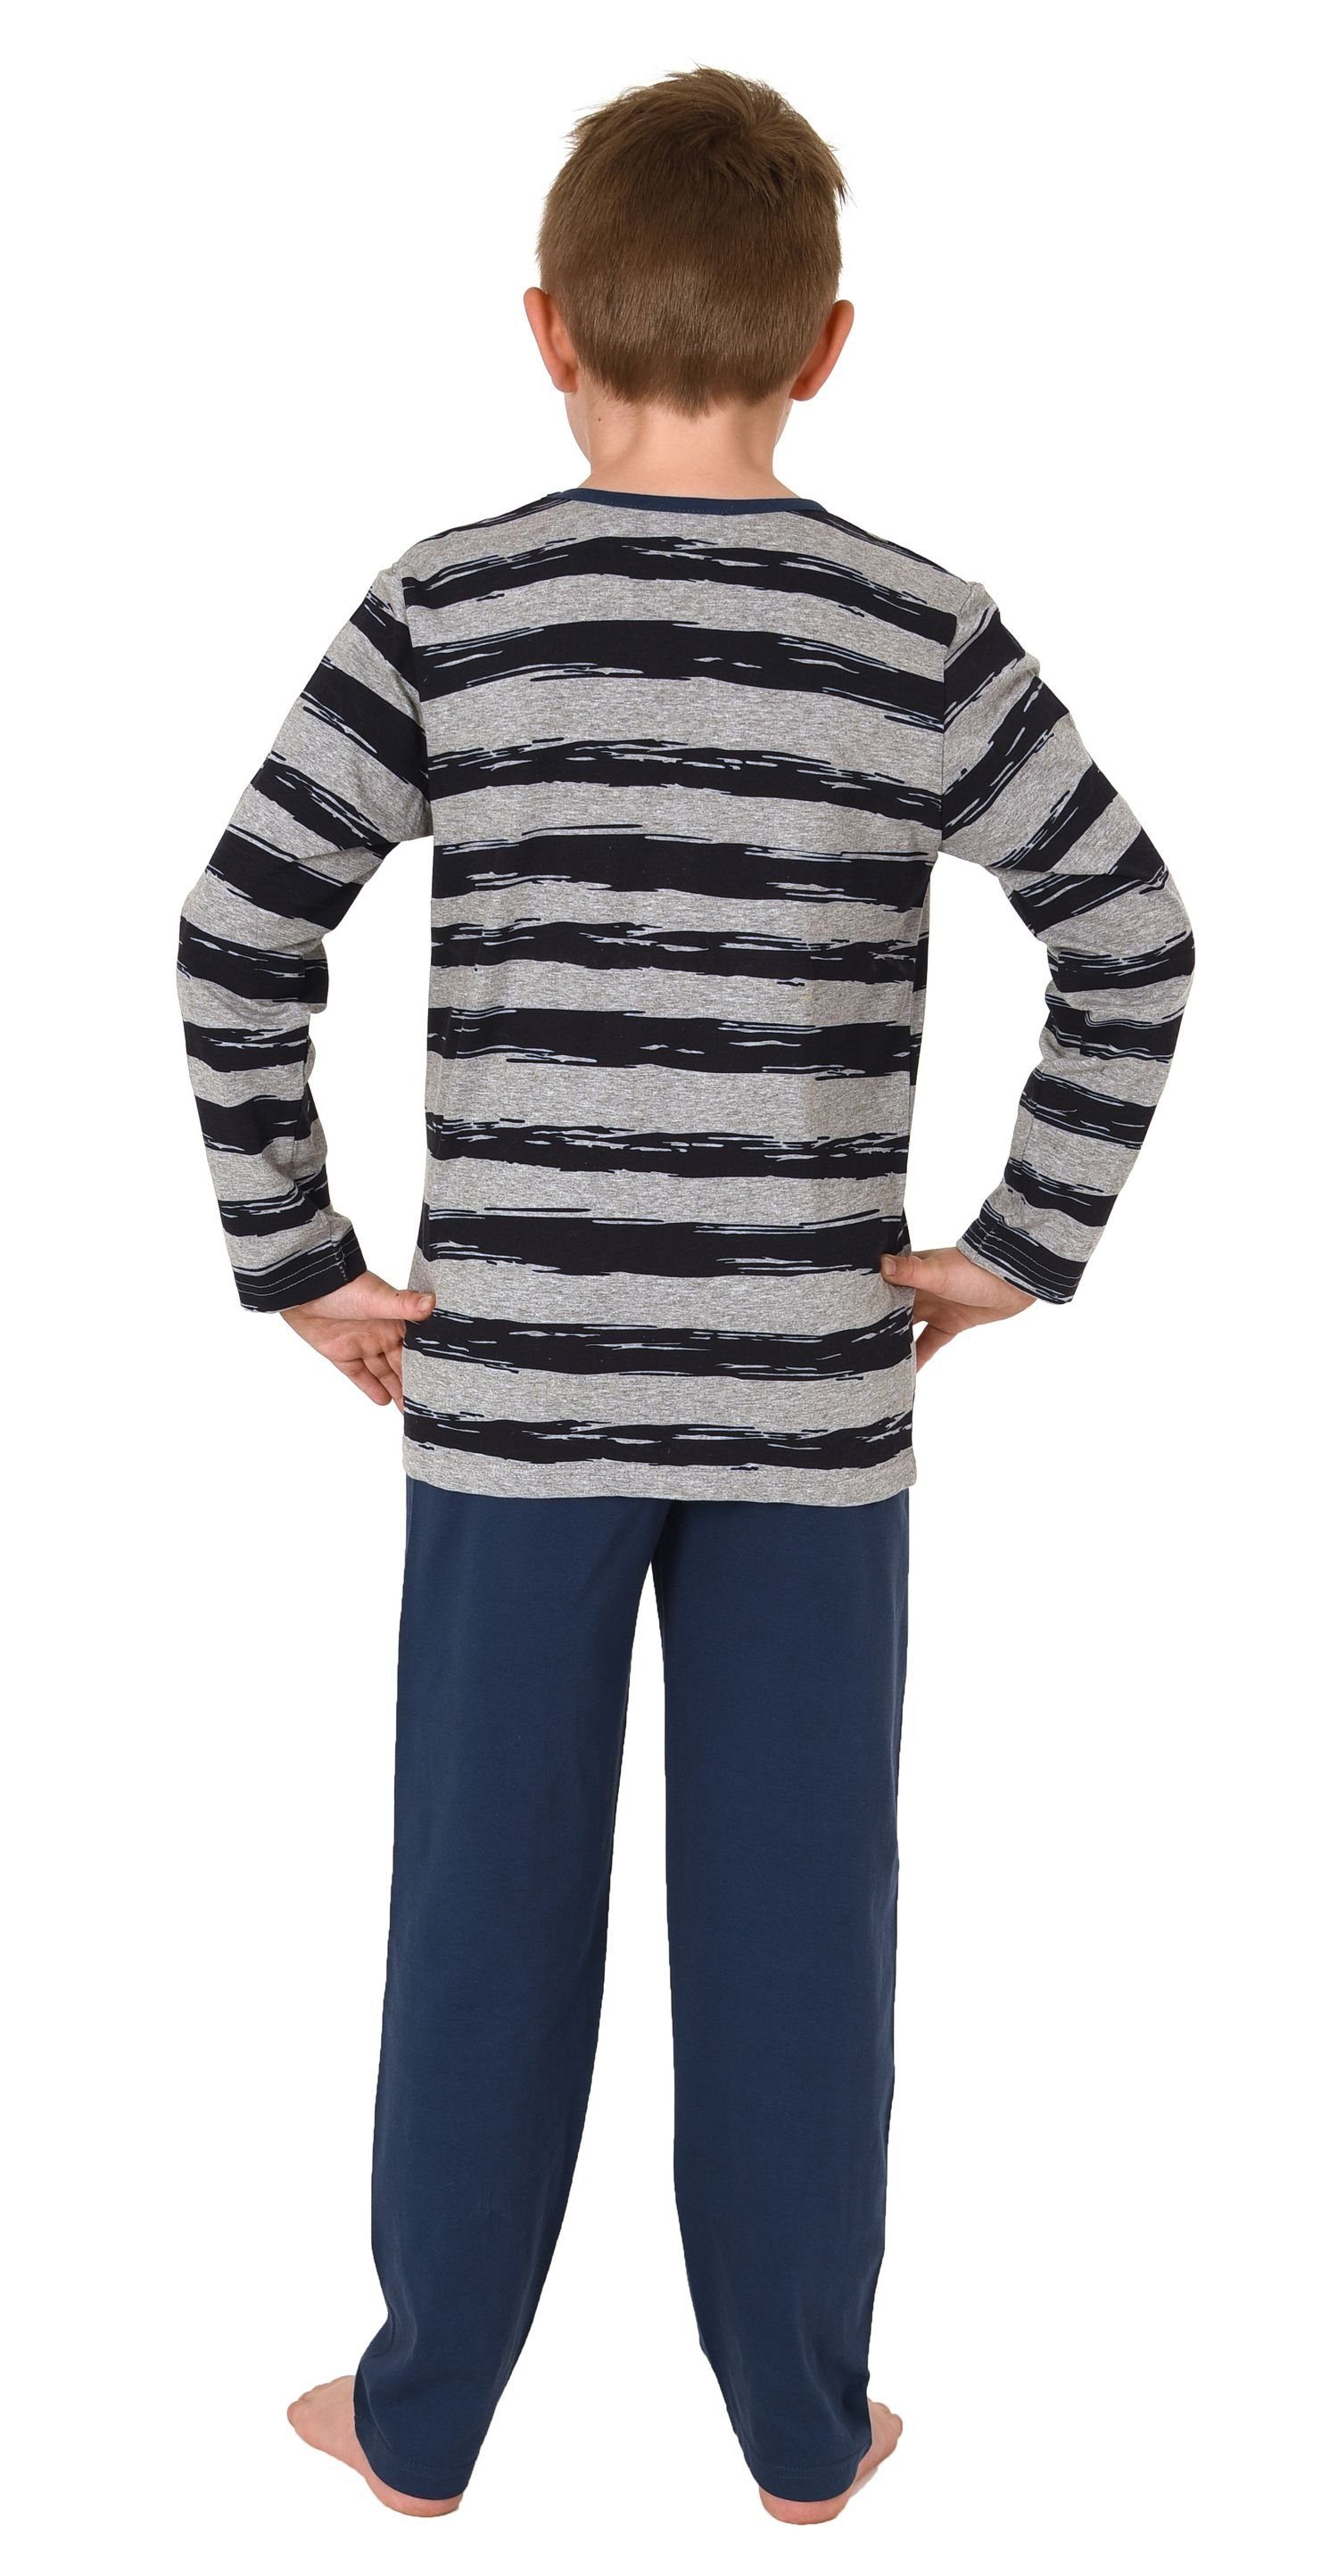 Jungen - Normann Pyjama Streifen-Muster coolem 10 lang grau Pyjama 700 mit 212